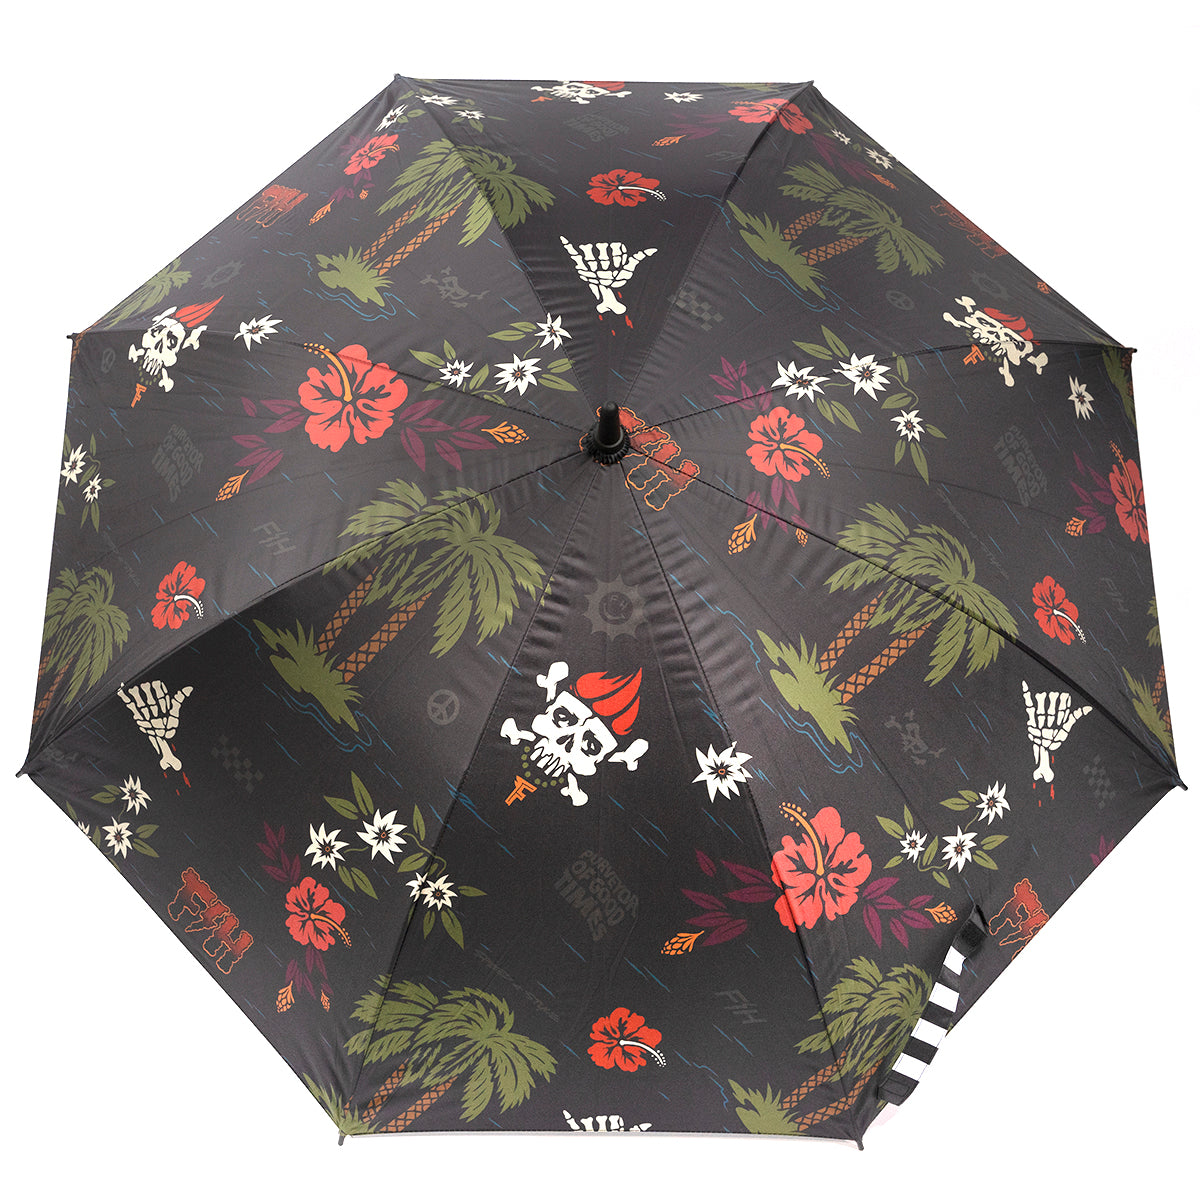 Tribe Umbrella - Black